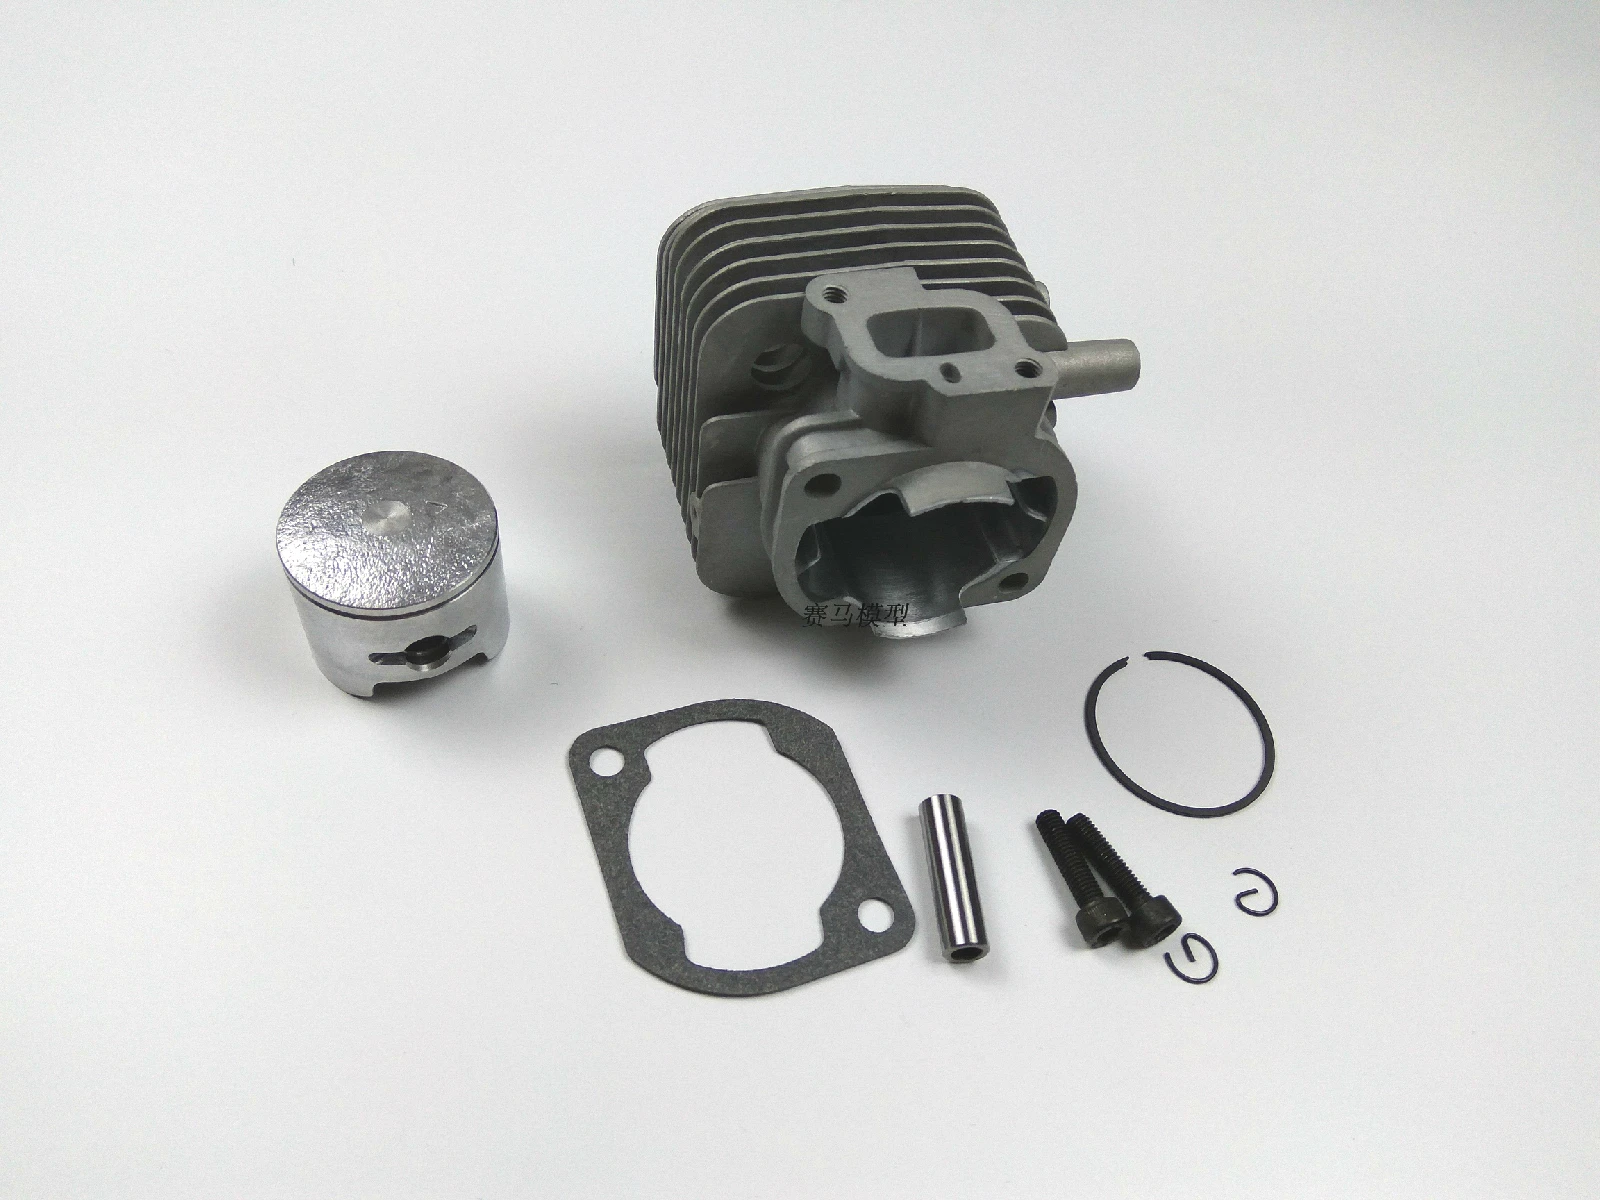 Cylinder Piston Set 2 Hole Fixed 29cc Engine Fit 1/5 Hpi Rofun Rovan Km Baja 5b 5t 5sc Losi 5ive Toy Parts